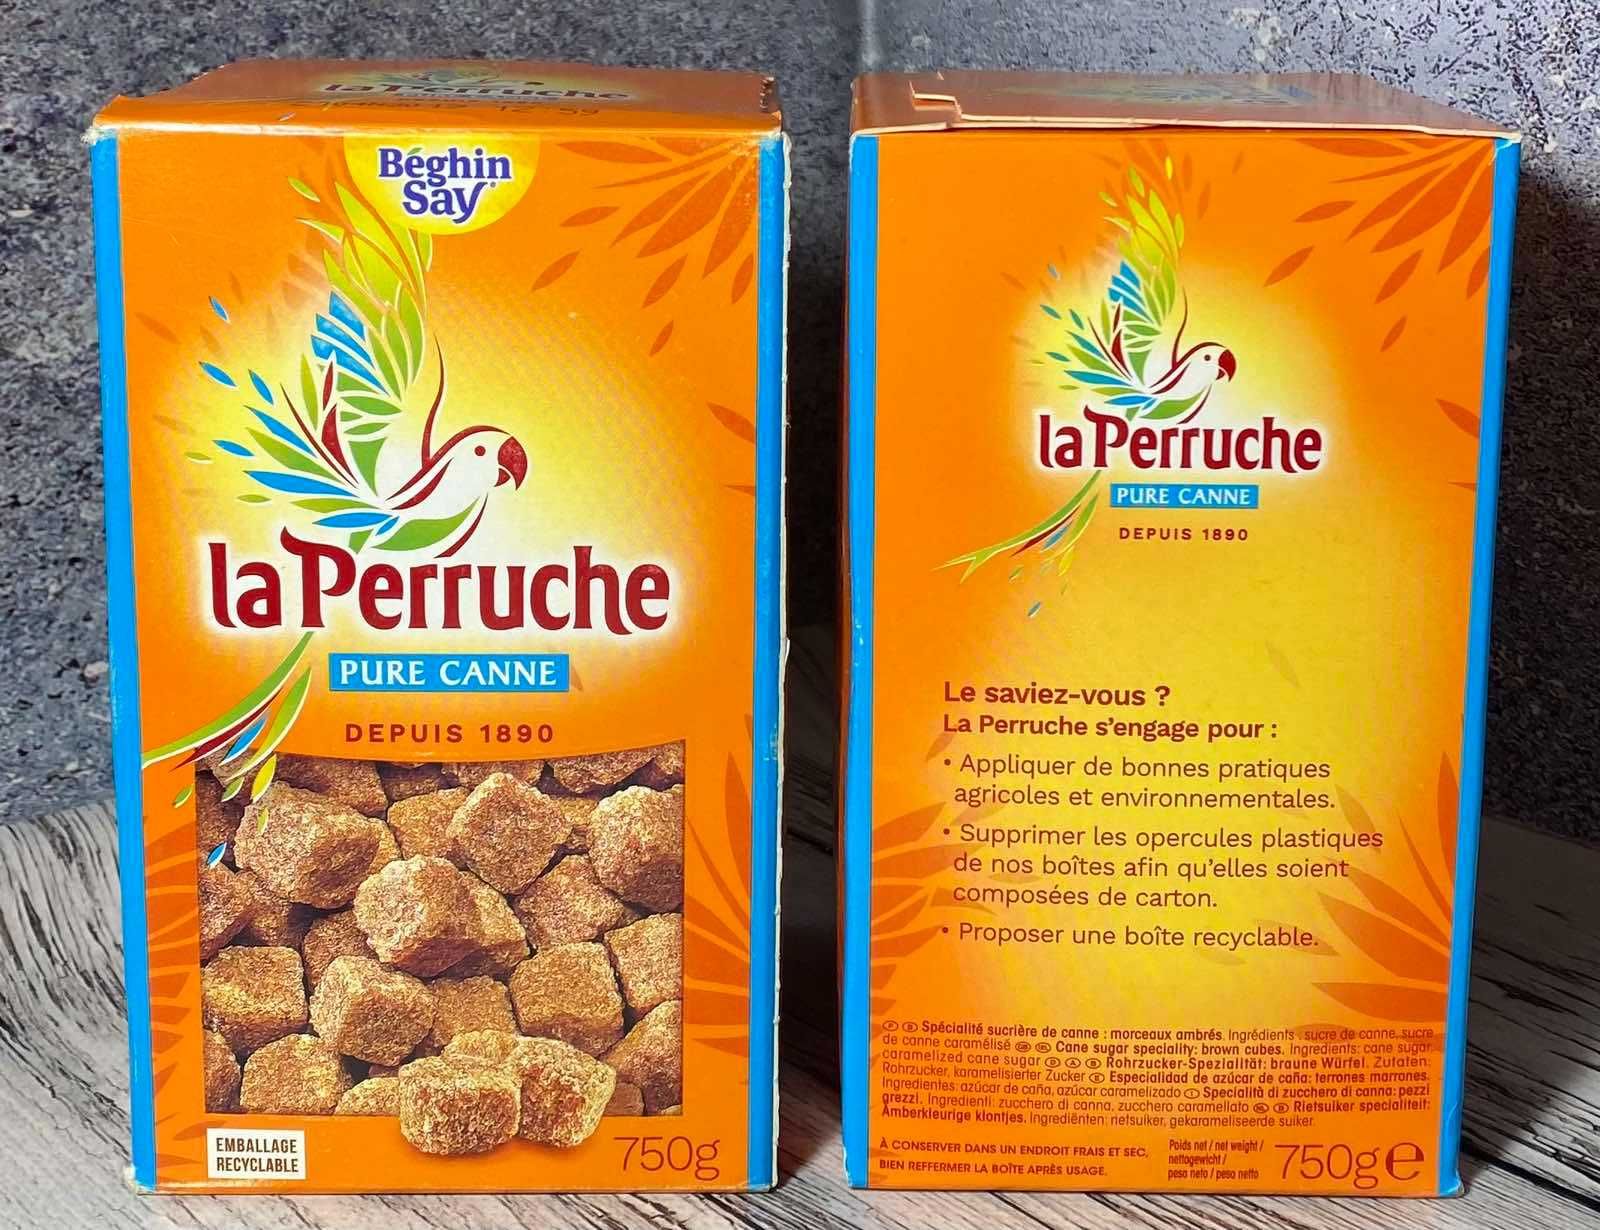 Тростинний цукор La Perruche кубиком
Вага 750 г